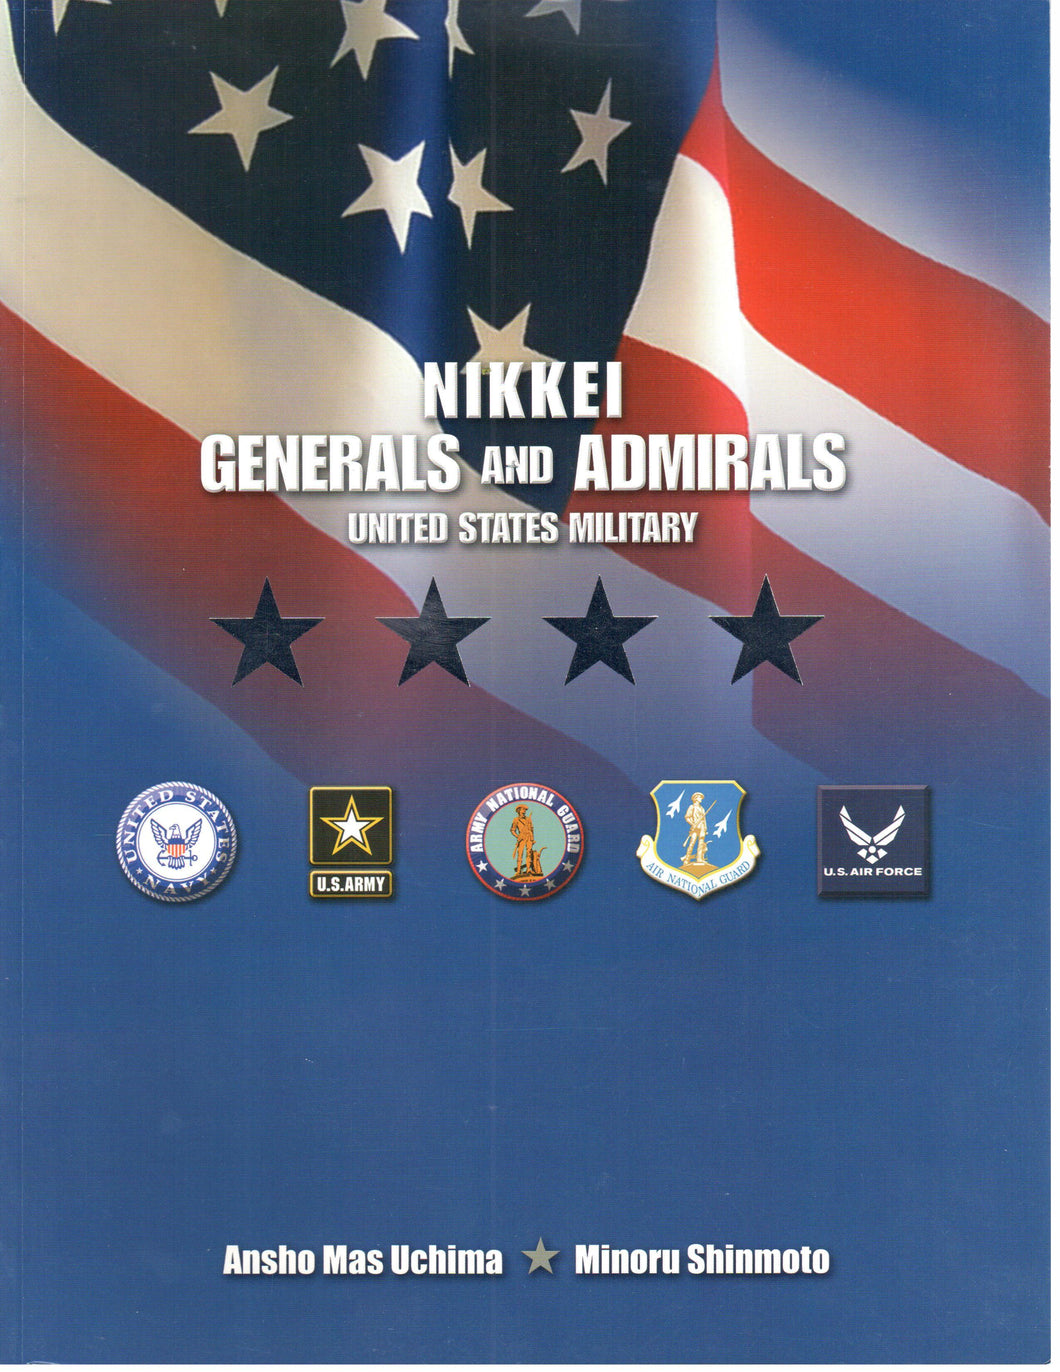 Nikkei Generals and Admirals